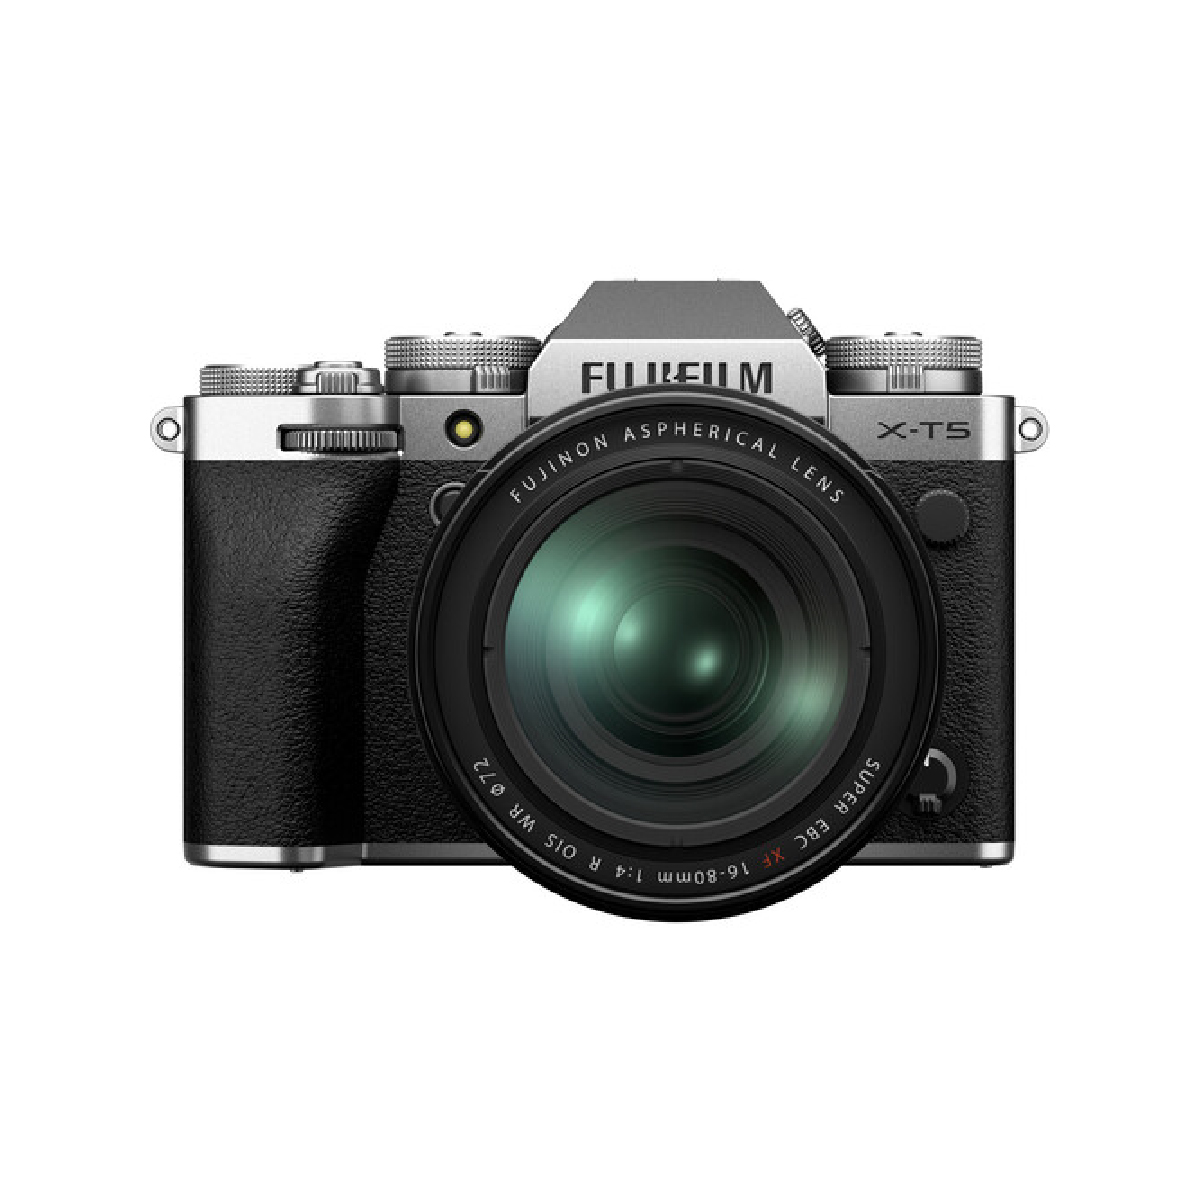 Fujifilm X-T5 – Mirrorless Camera Body with 16-80mm Lens – Silver (1)